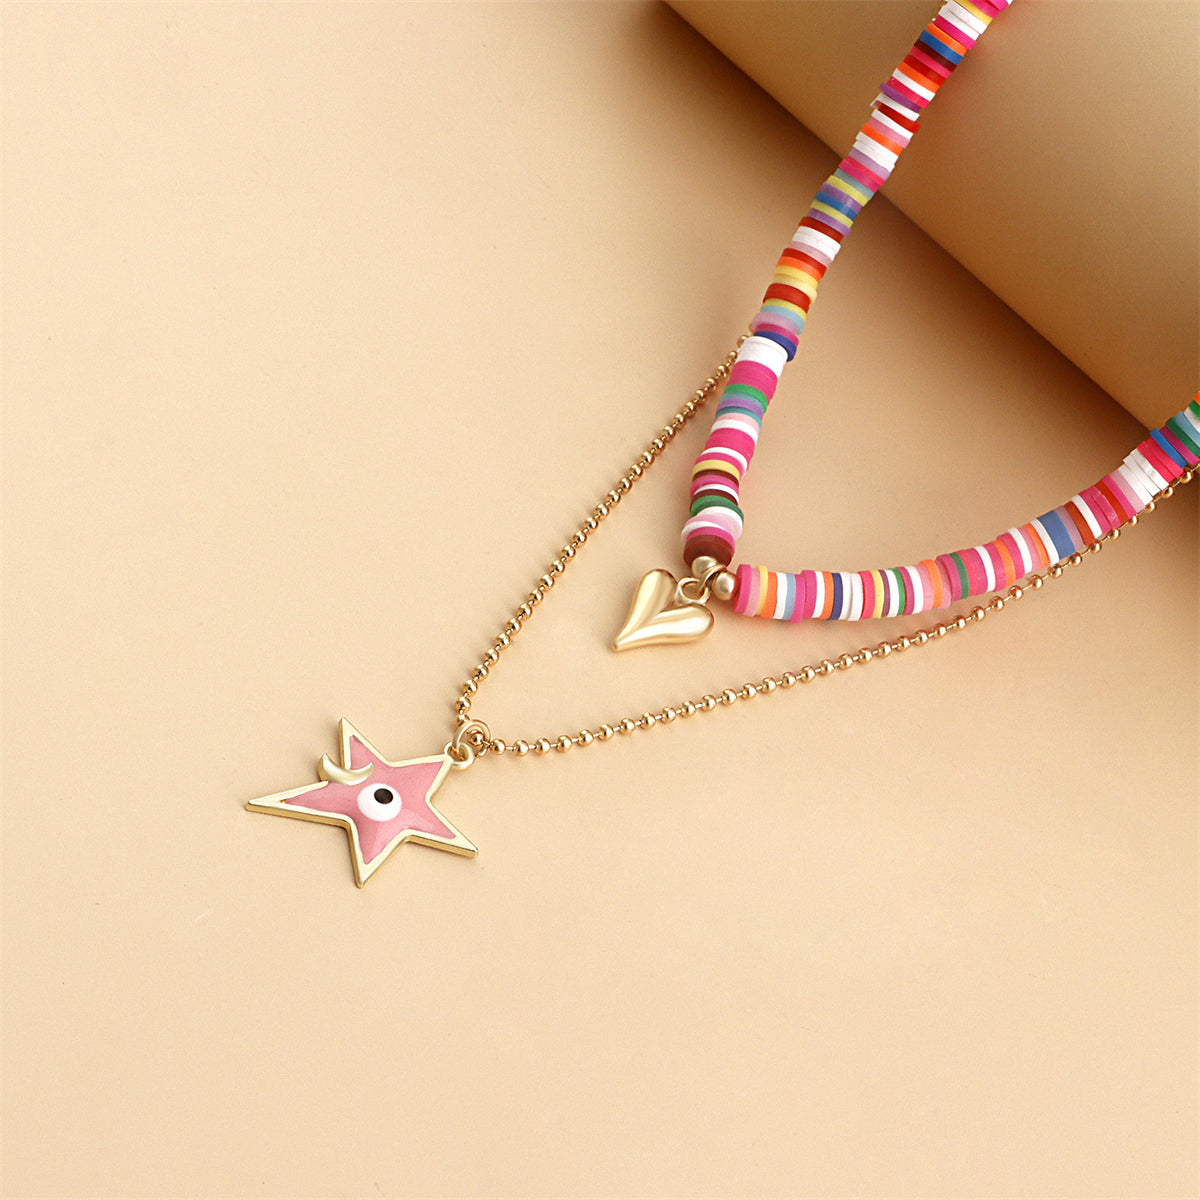 Pink Enamel & 18K Gold-Plated Heart & Star Pendant Necklace Set